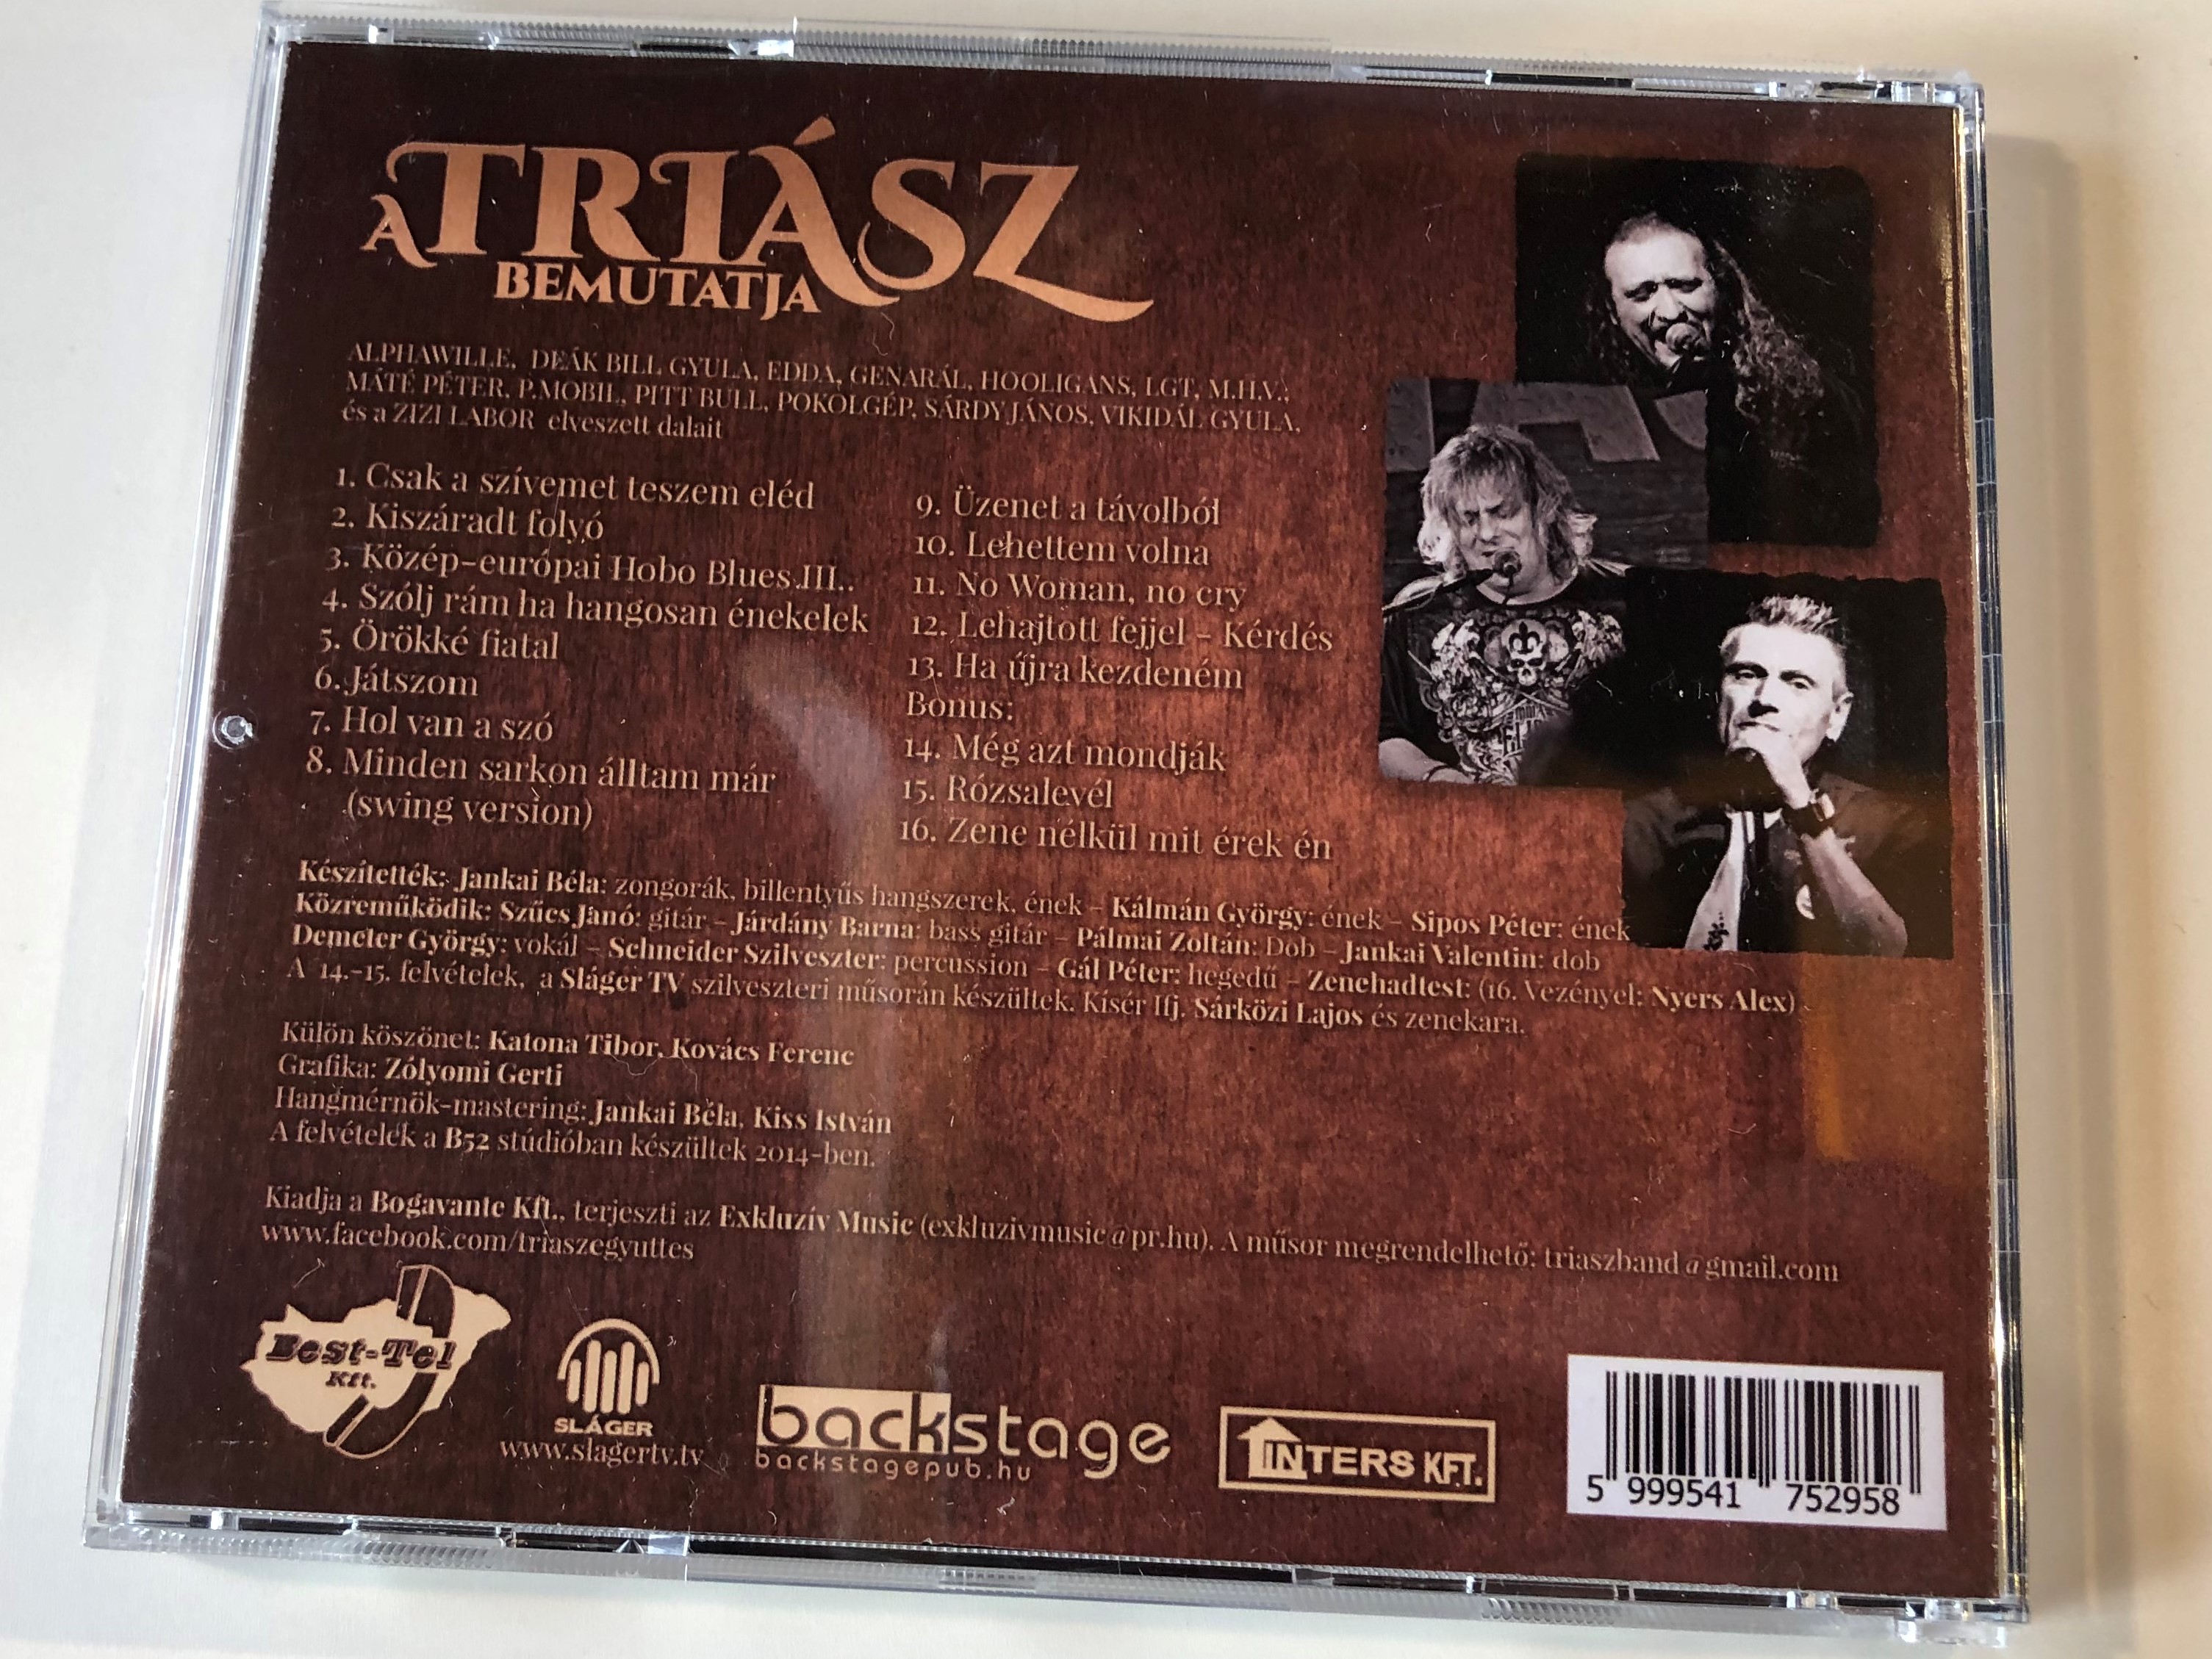 Triász ‎– Elveszett dalok 2. / Audio CD 2014 / 5999541752958 -  bibleinmylanguage